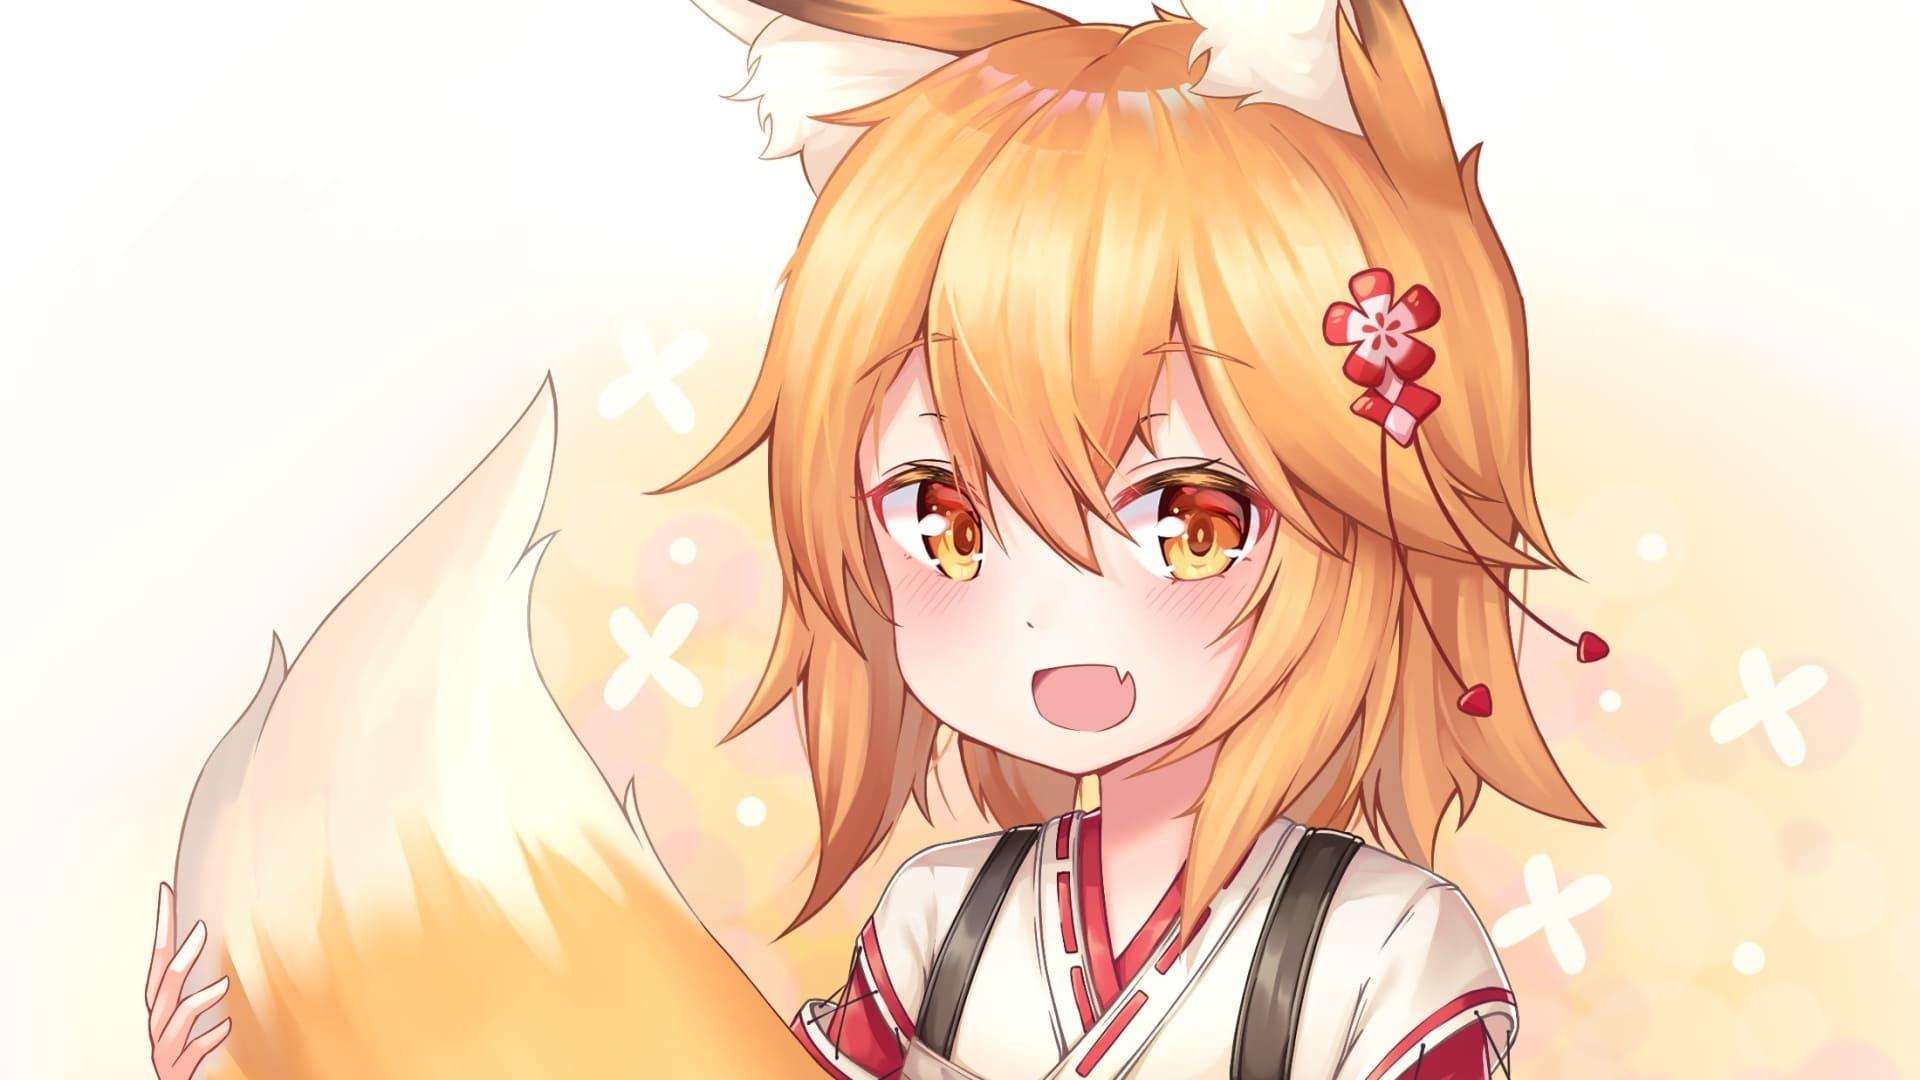 The Helpful Fox Senko-san backdrop